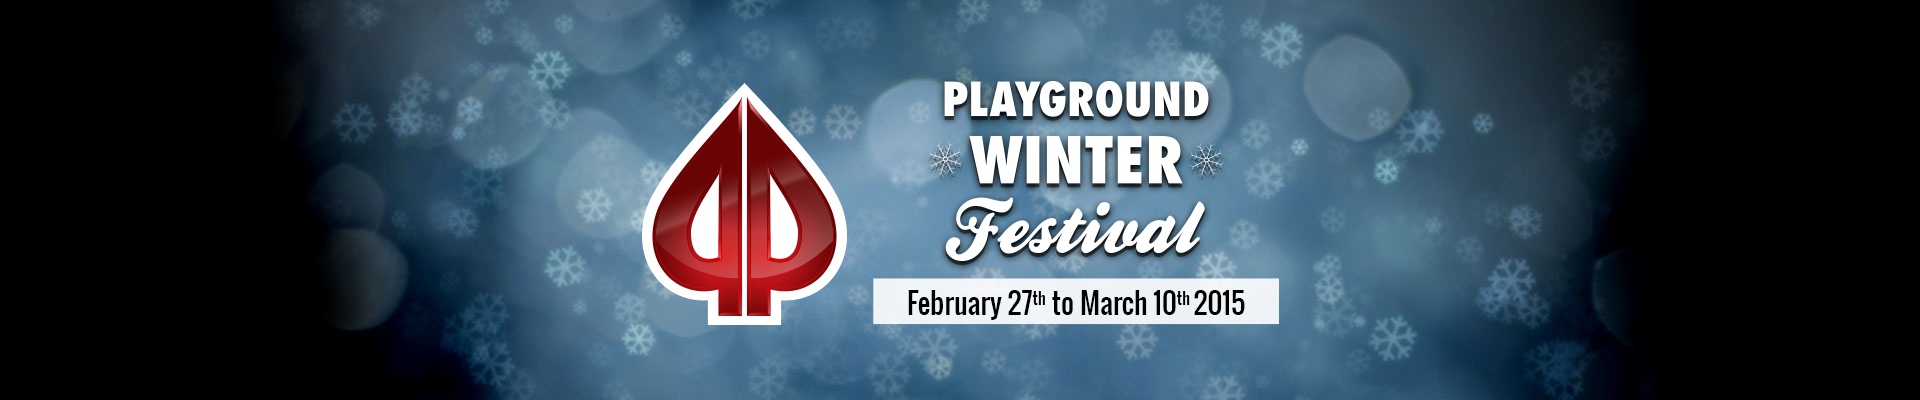 Playground Winter Festival 2015